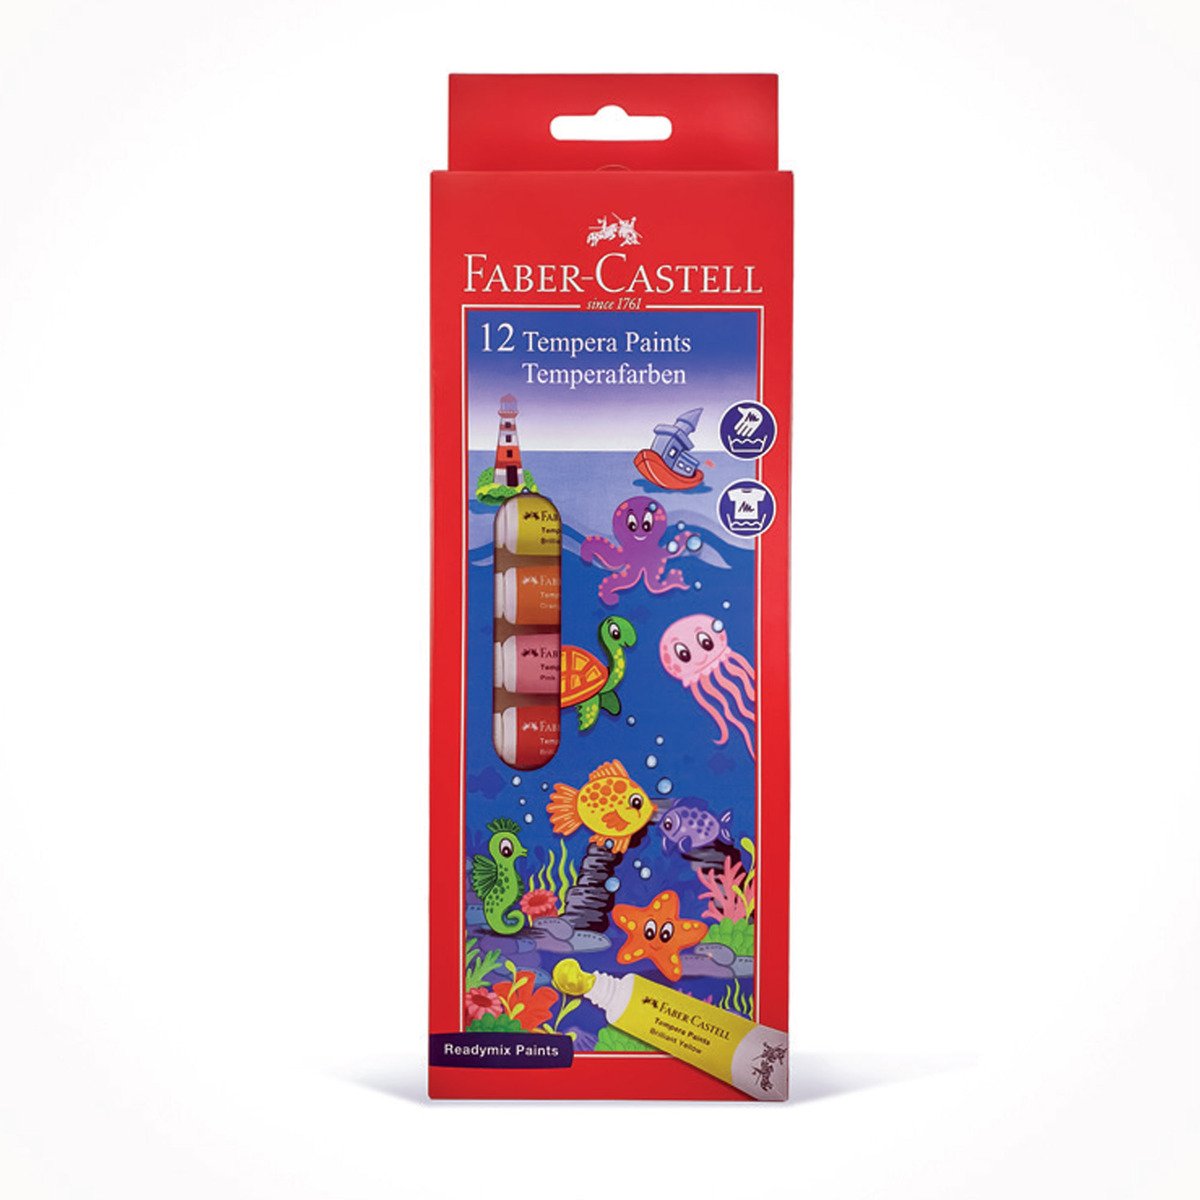 Faber-Castell Tempera Paint Tubes 12x9ml 370530